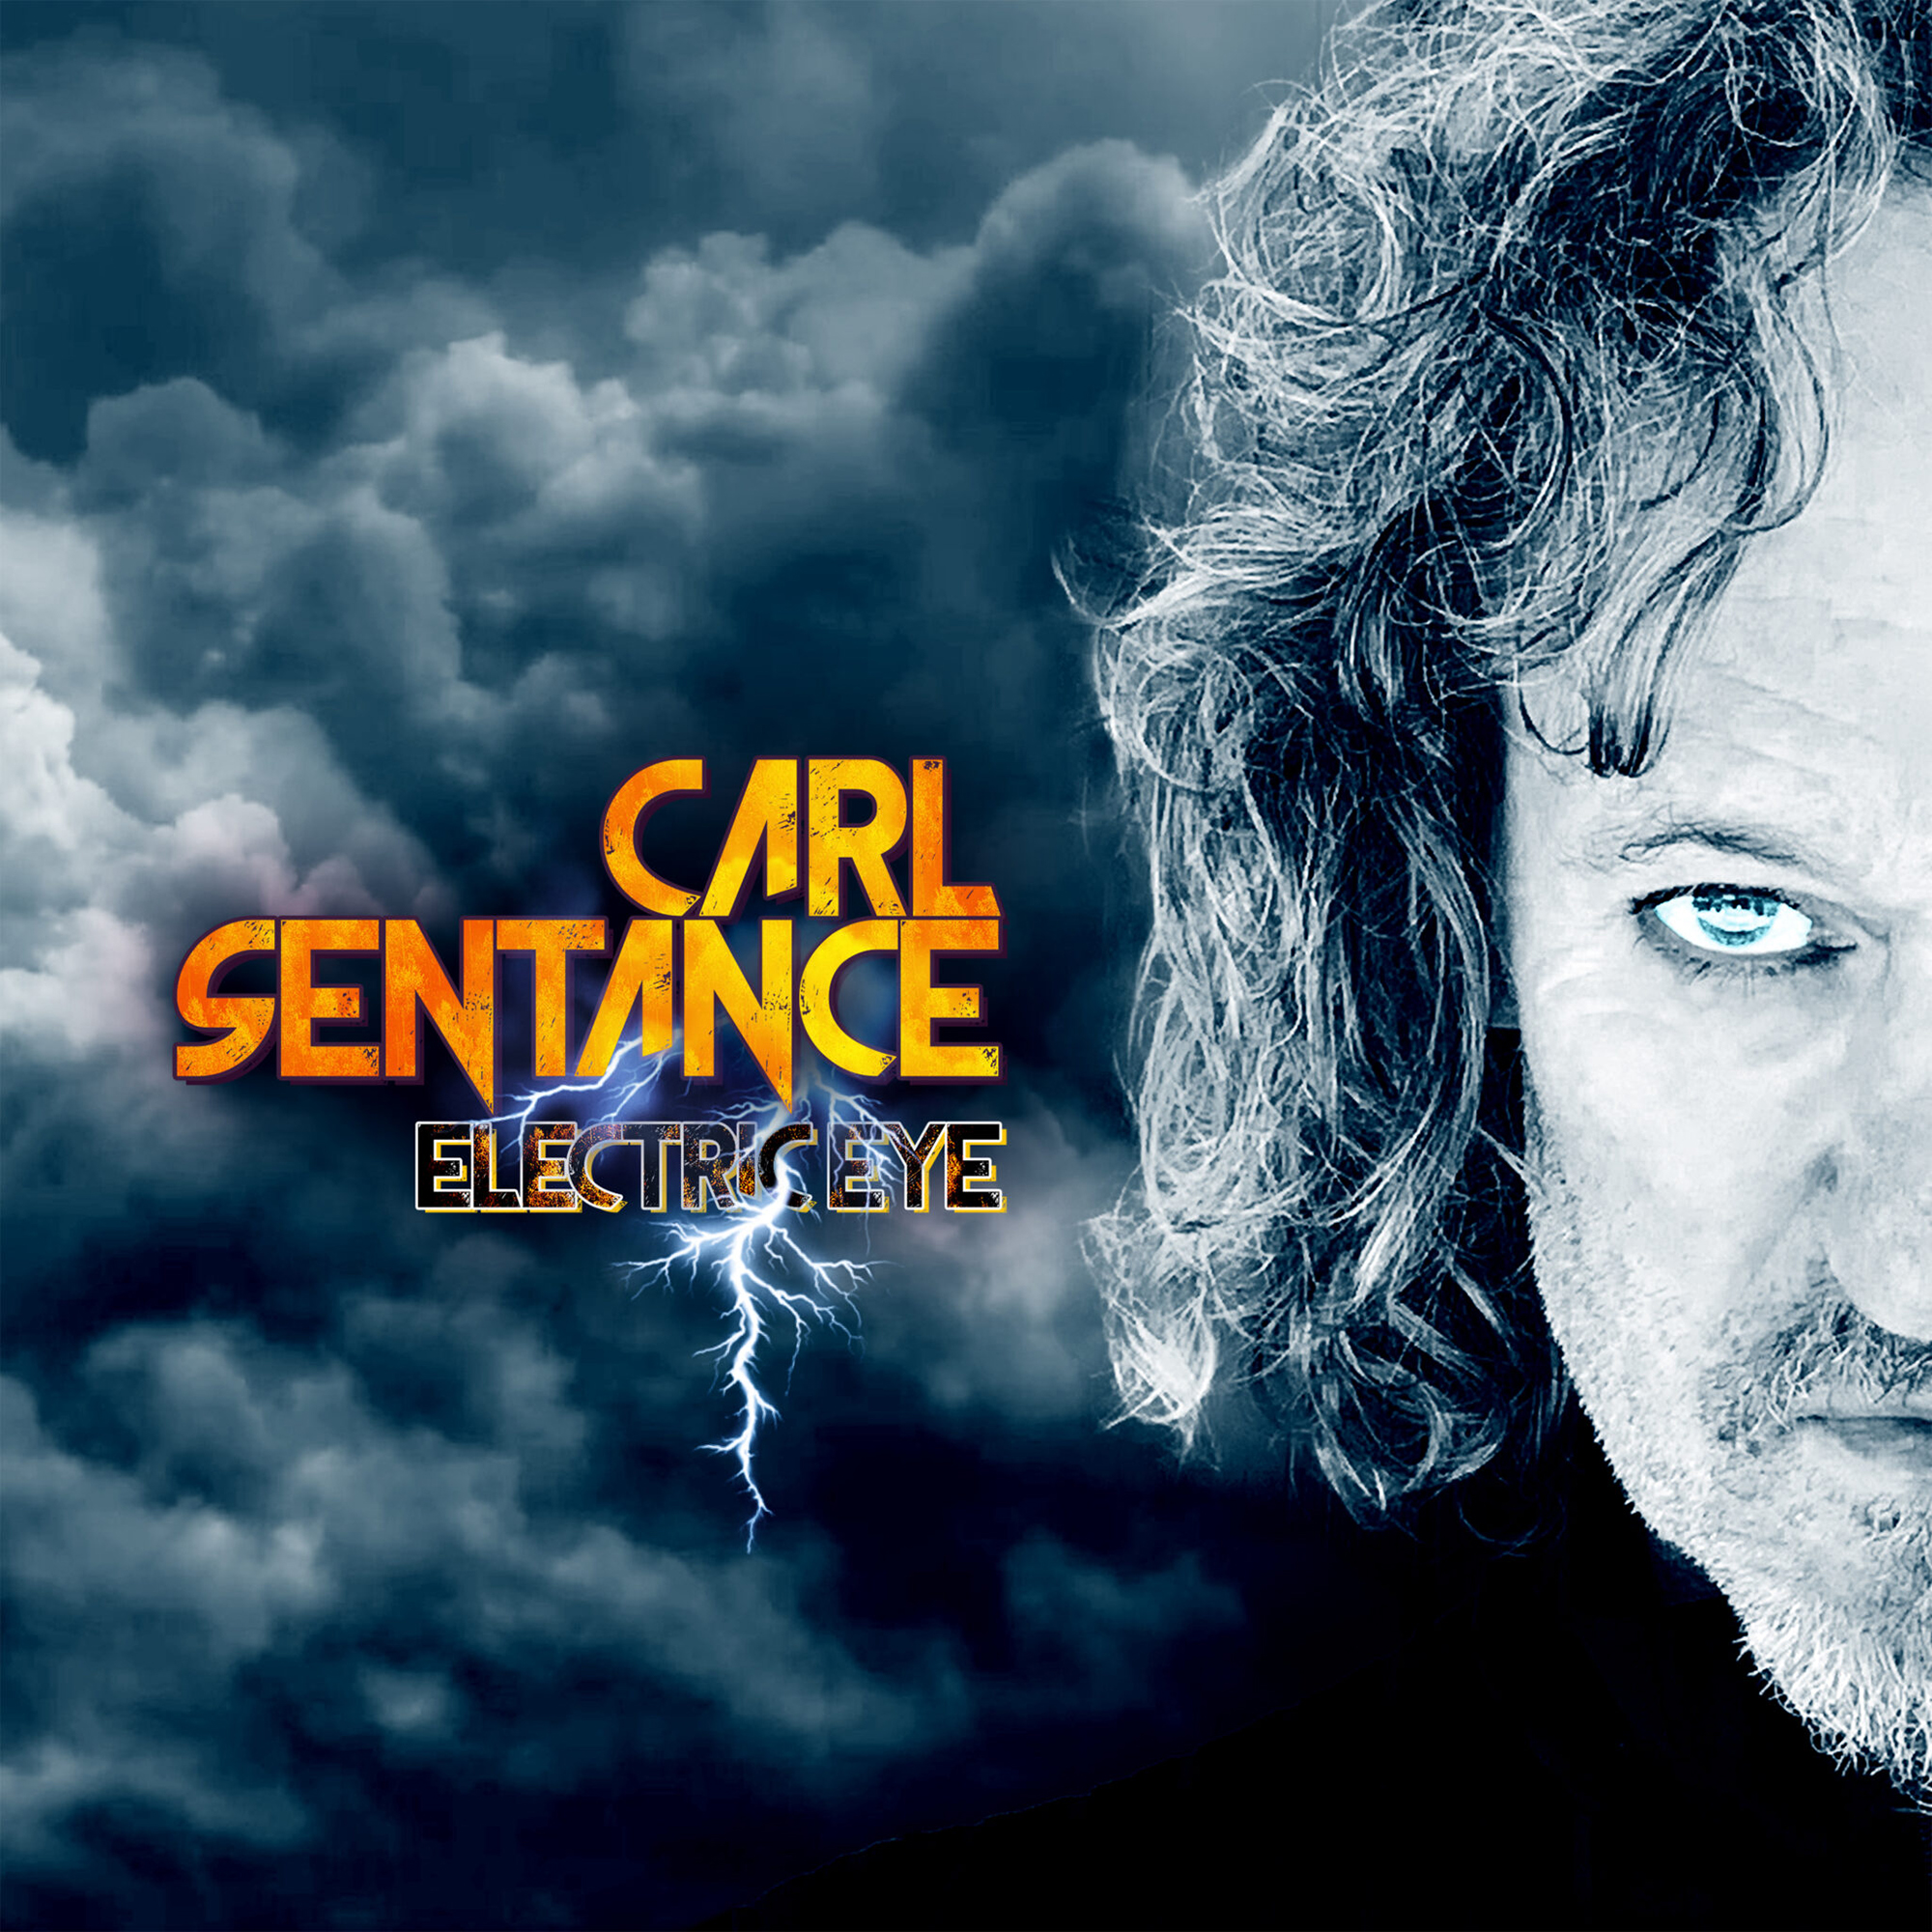 carl sentance 2021 electric eye